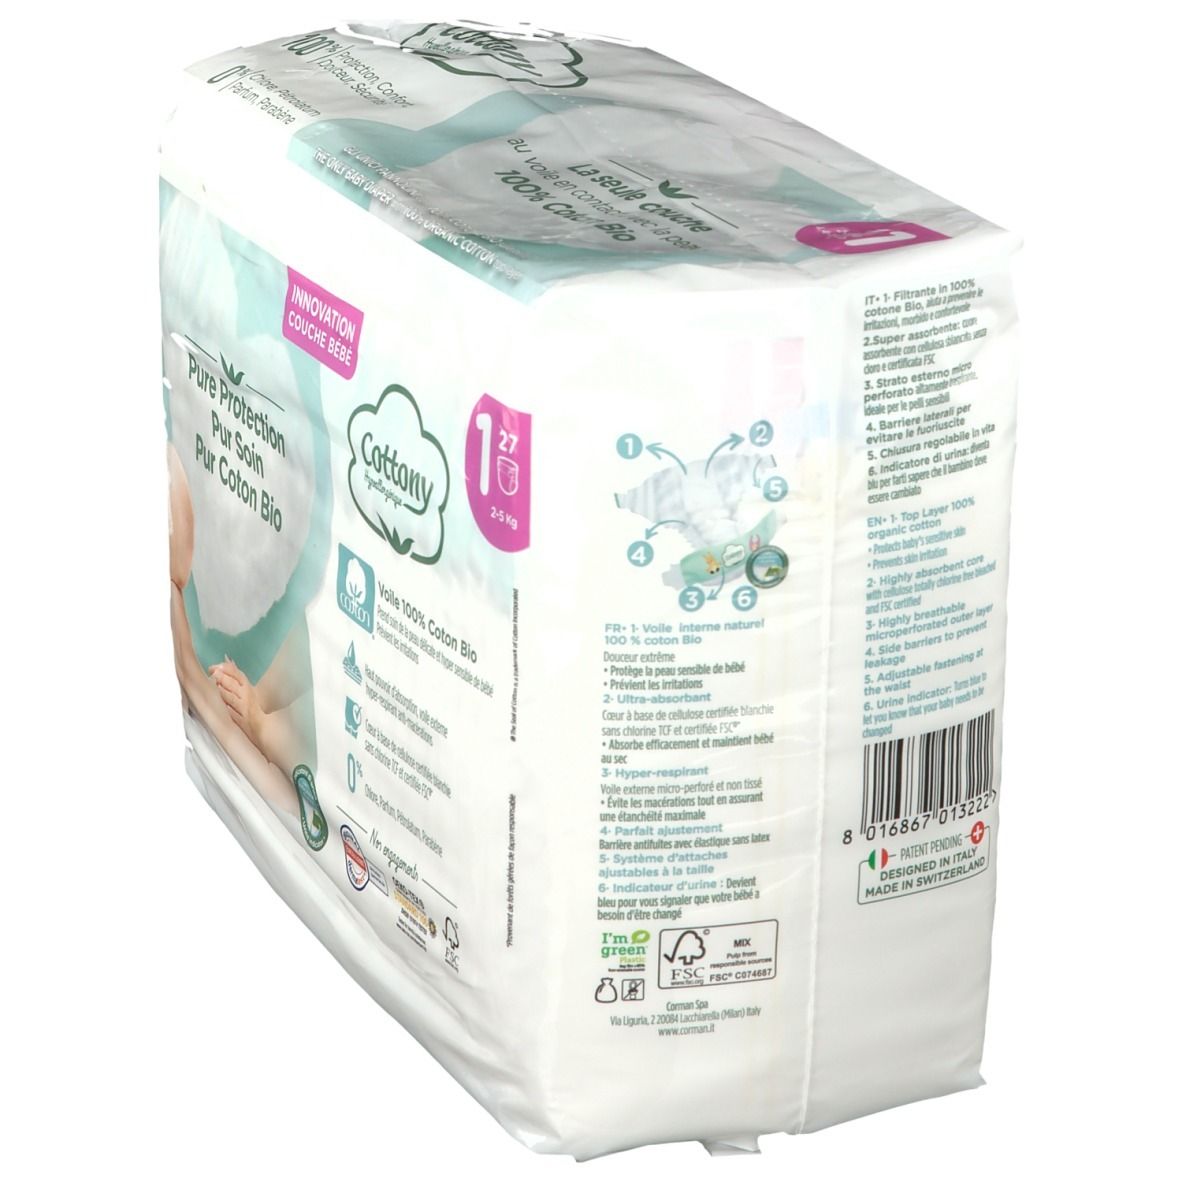 Cottony Couches Bébé Taille 1 (2-5 kg) 27 pc(s) - Redcare Pharmacie